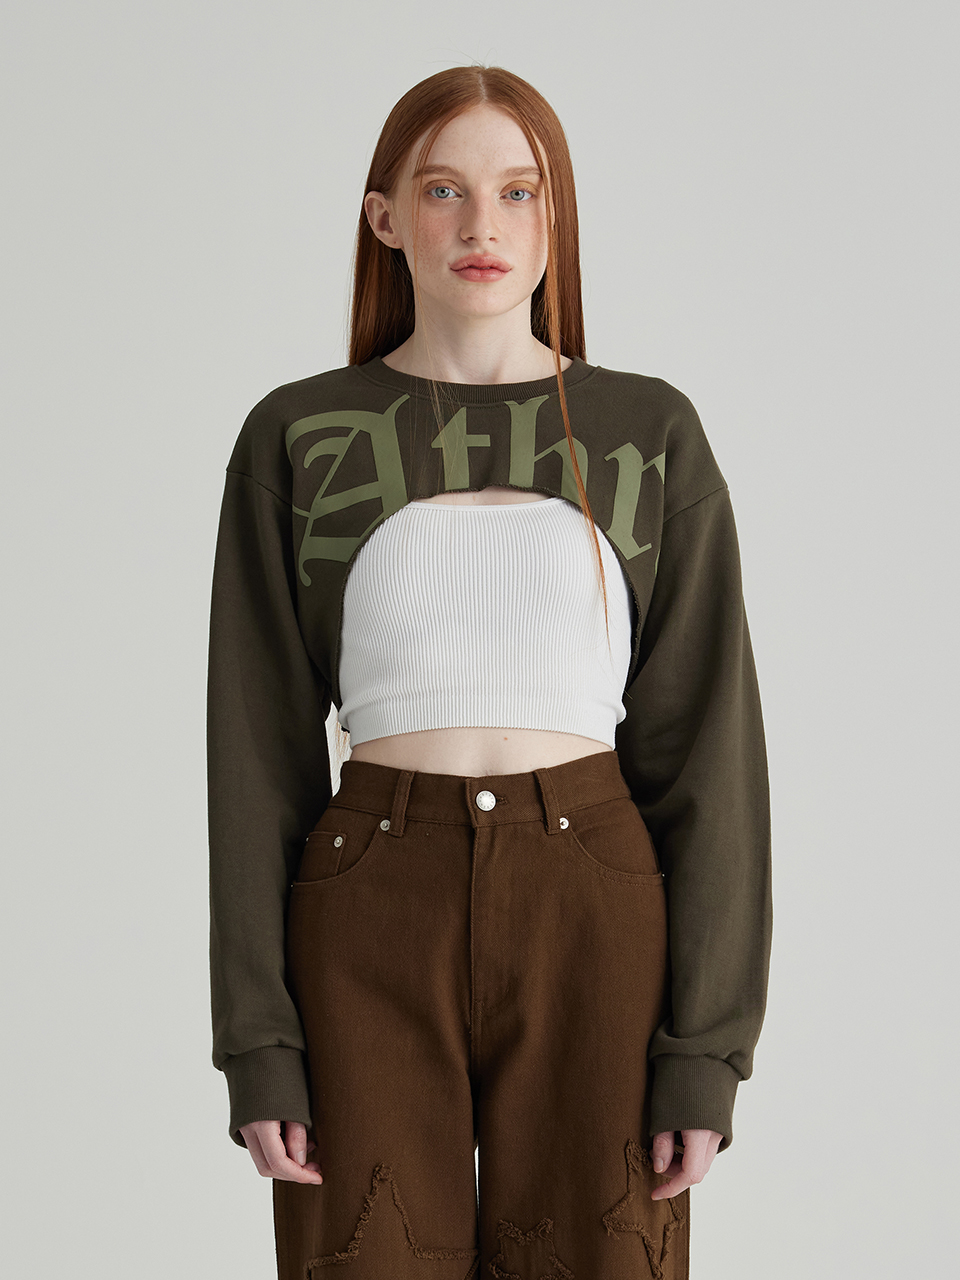 Khaki ATHR Maxi Cropped Sweatshirt